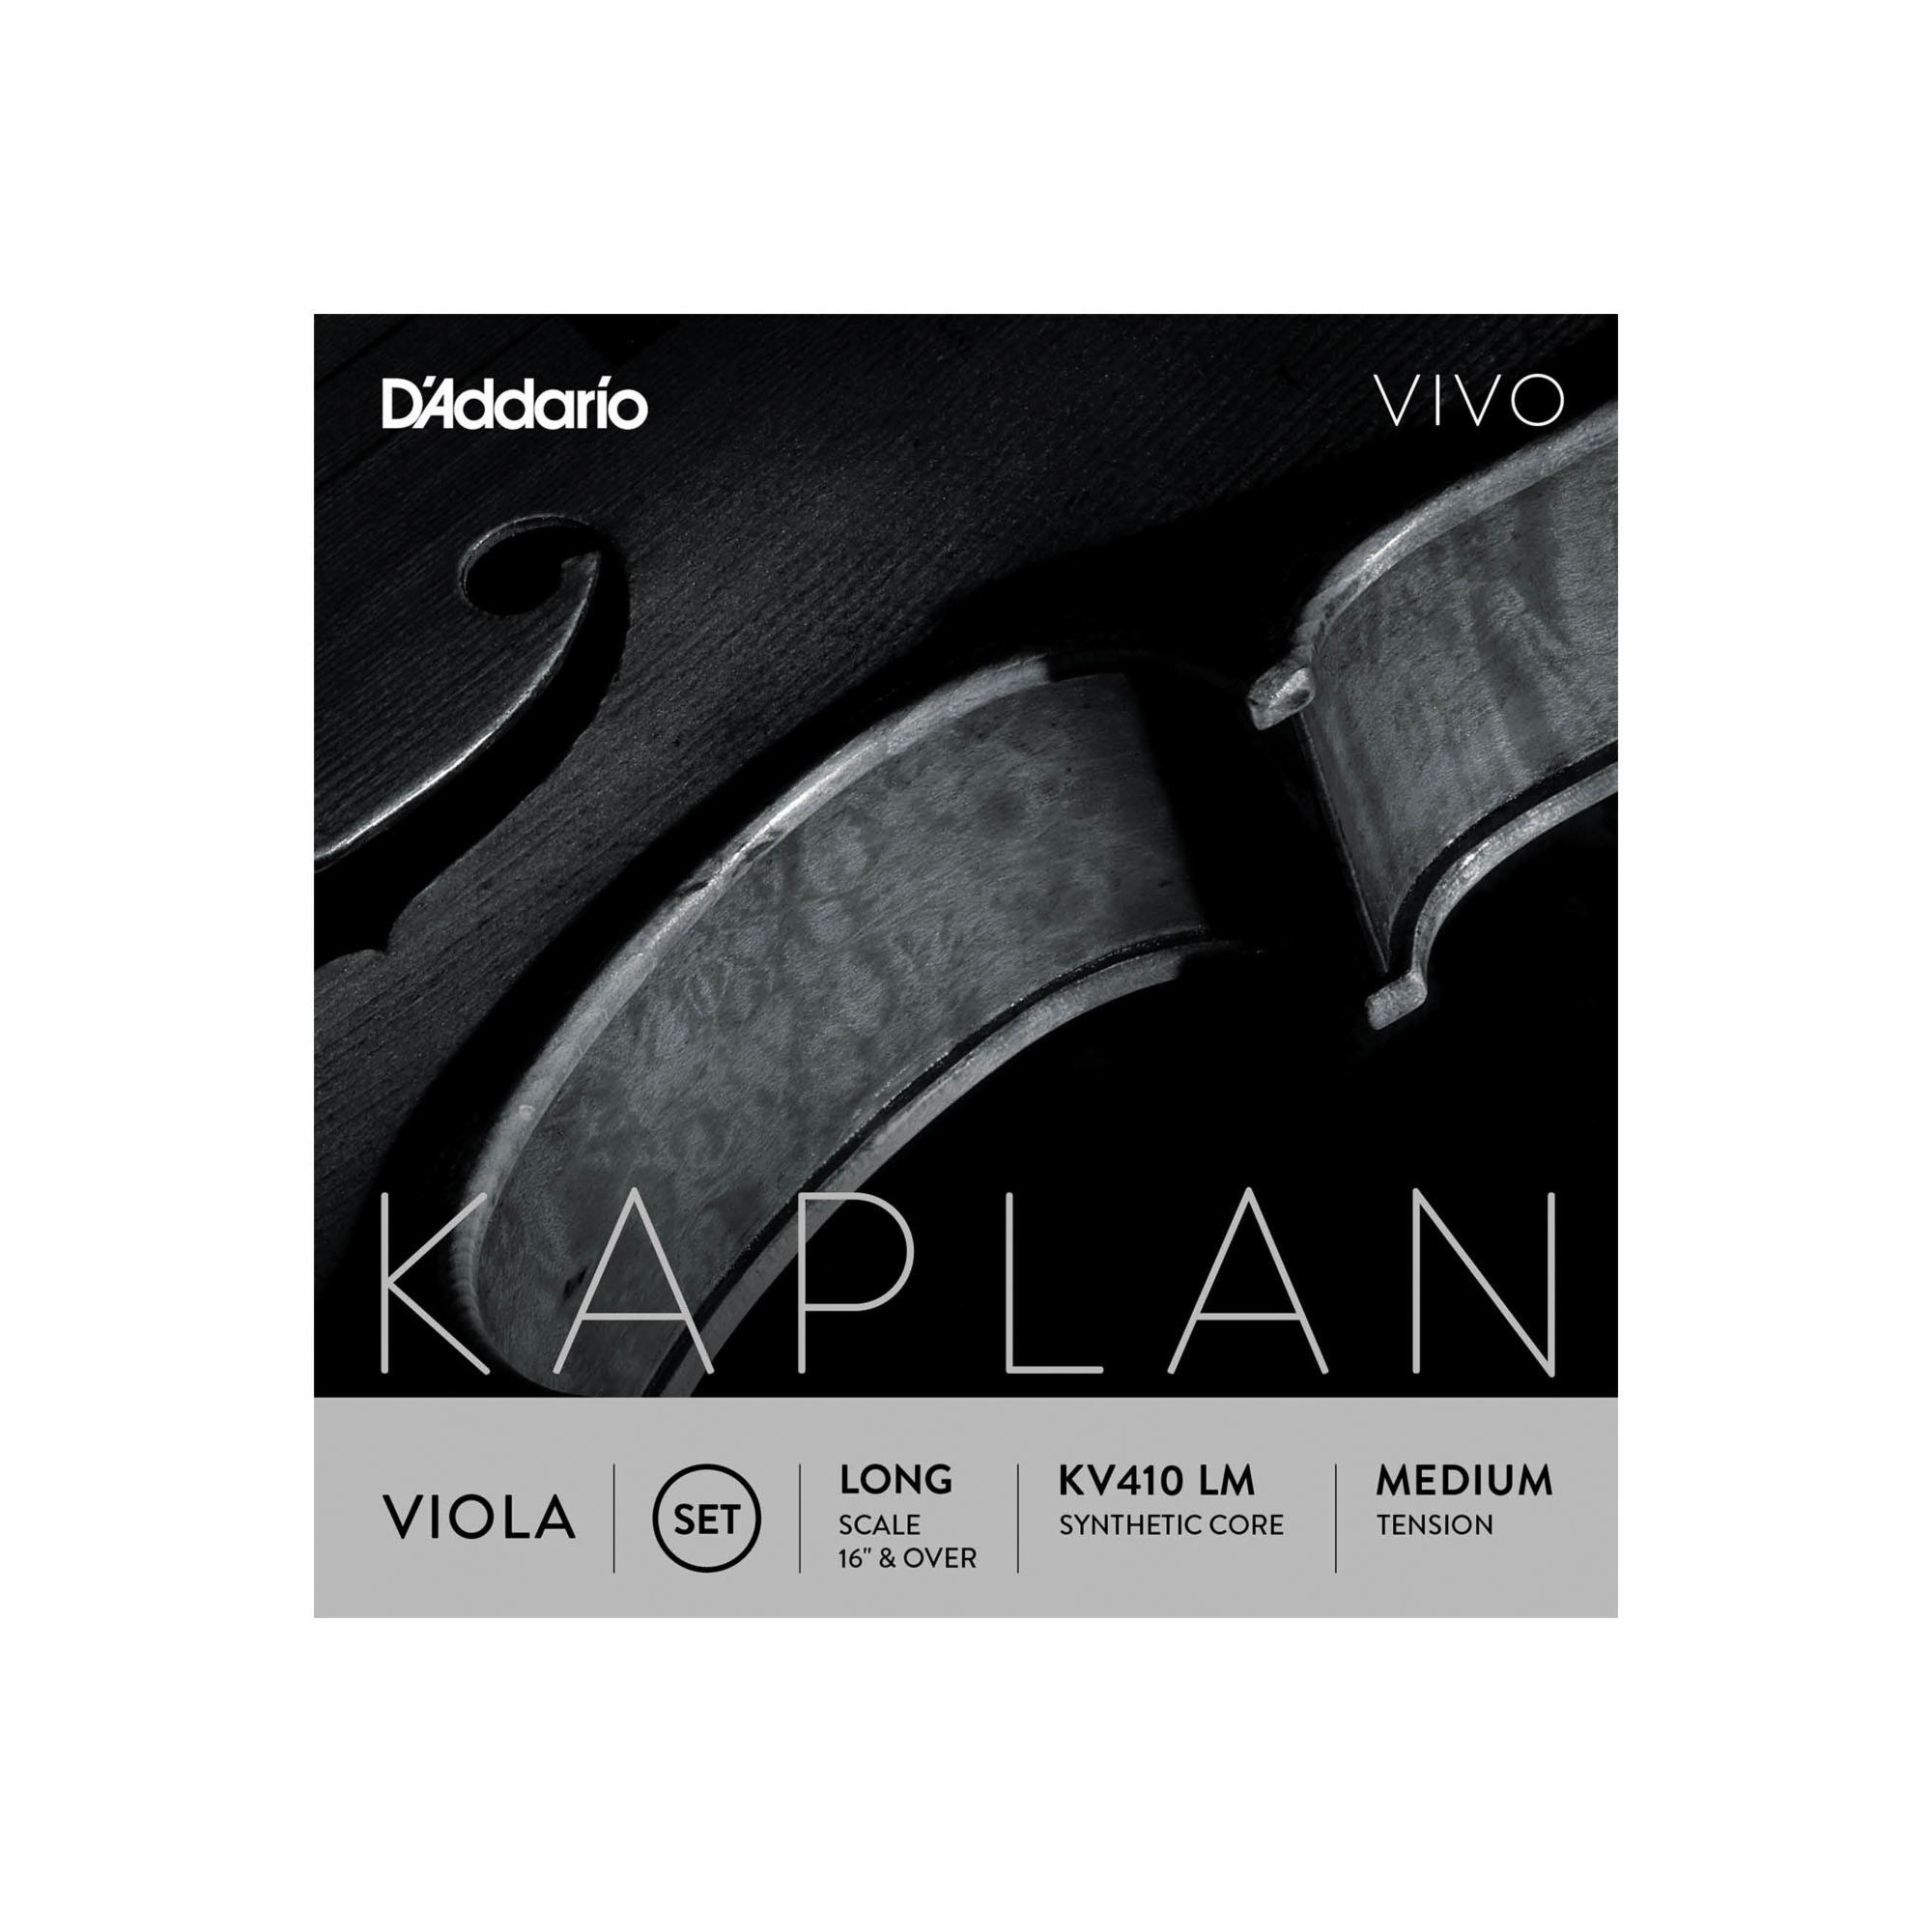 D'Addario Kaplan Vivo Viola Strings